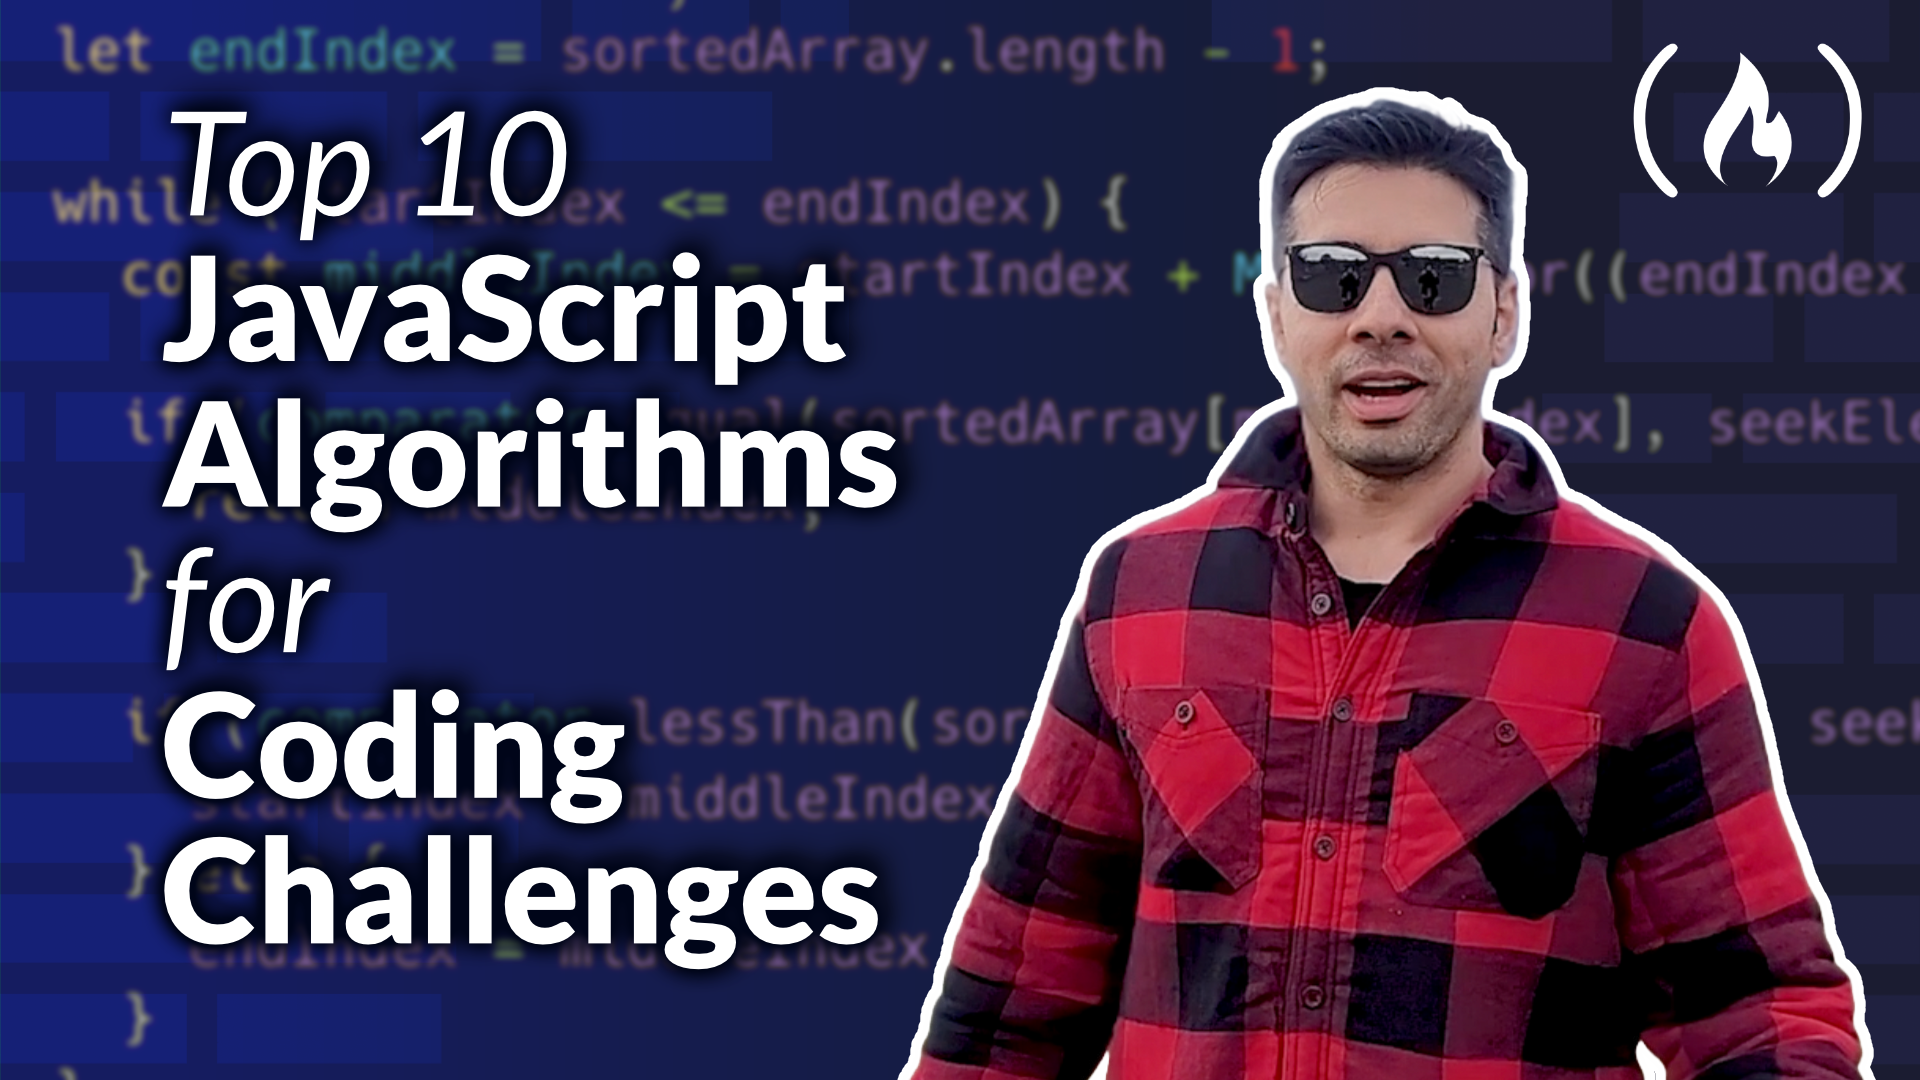 Image for Top 10 JavaScript Algorithms for Coding Challenges